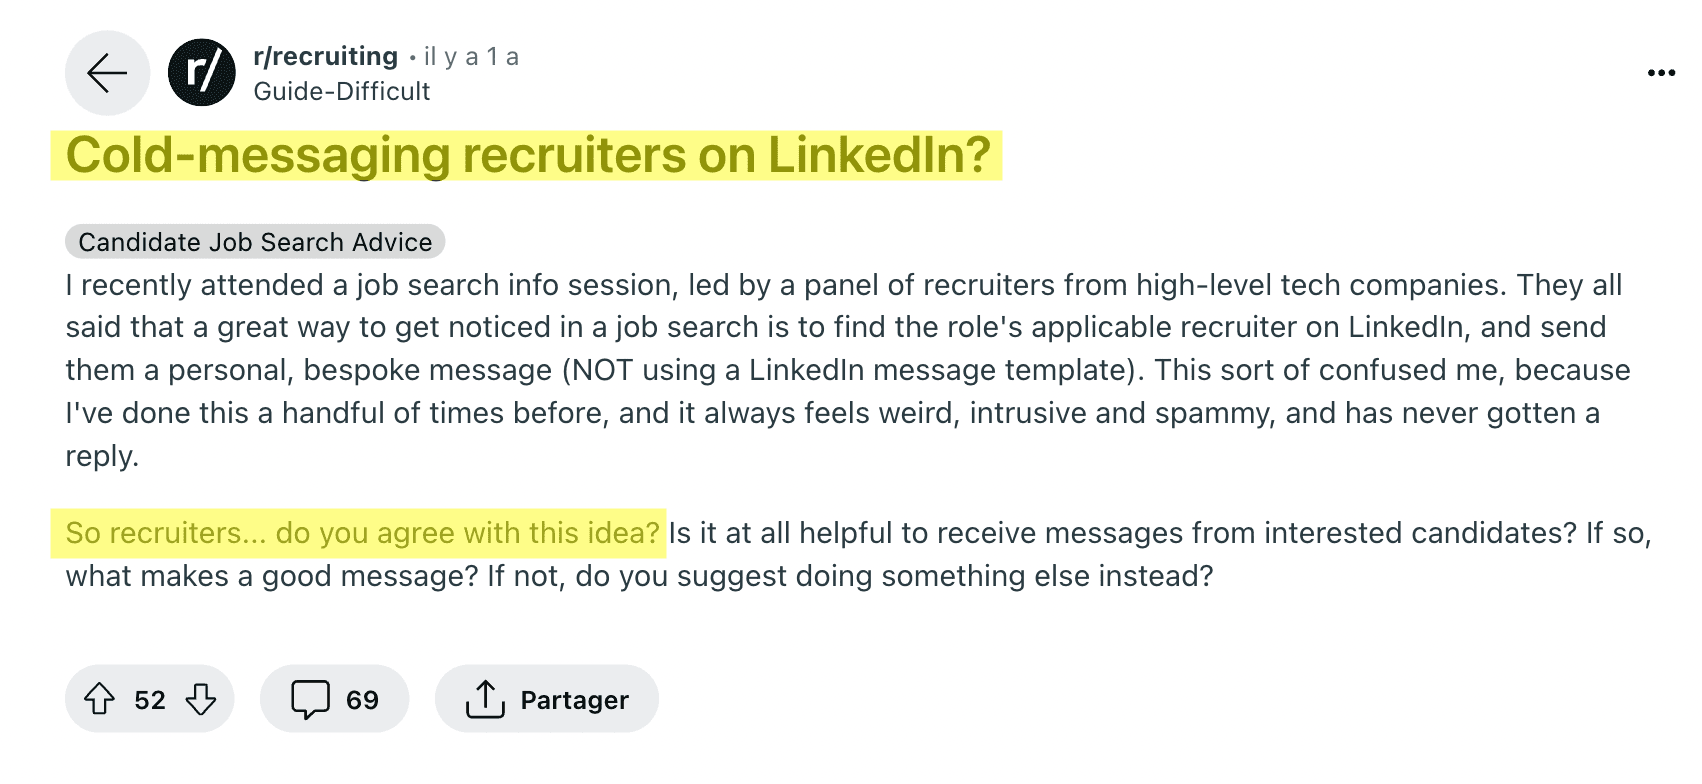 cold messaging recruiters on linkedin reddit post - image24.png